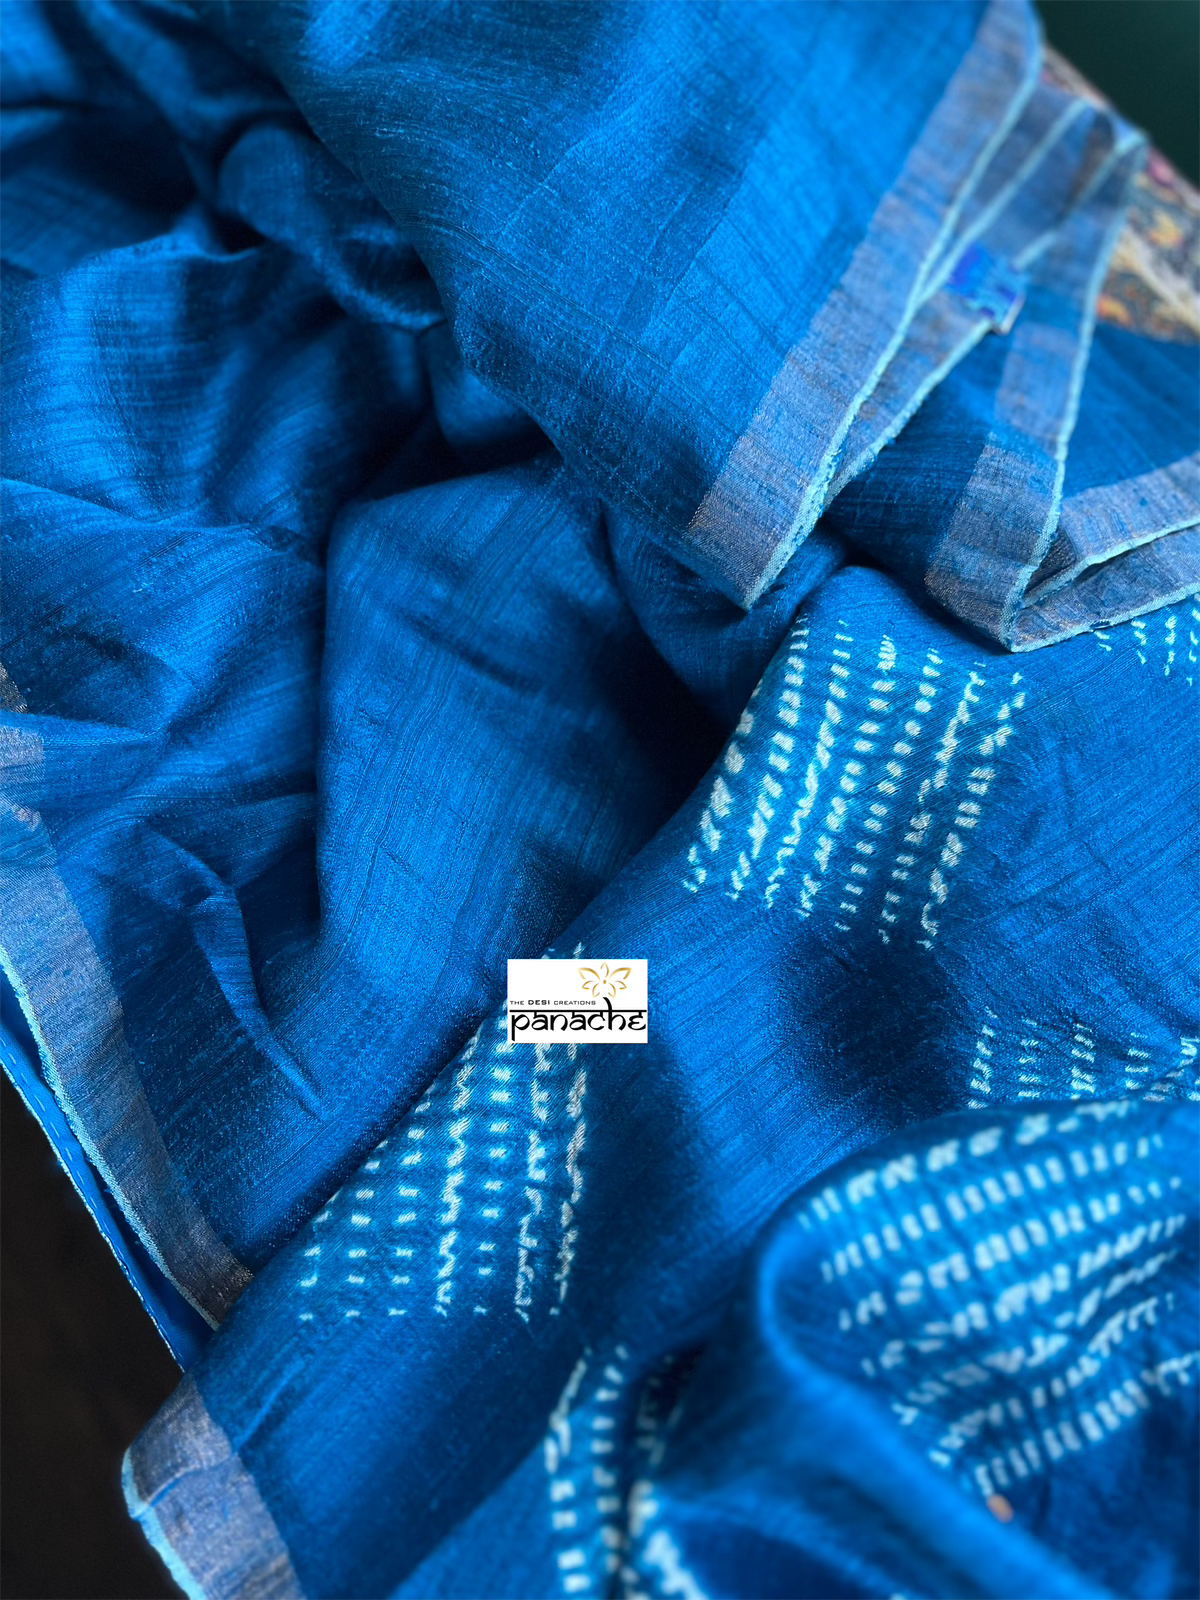 Pure Matka Silk Shibori - Royal Blue